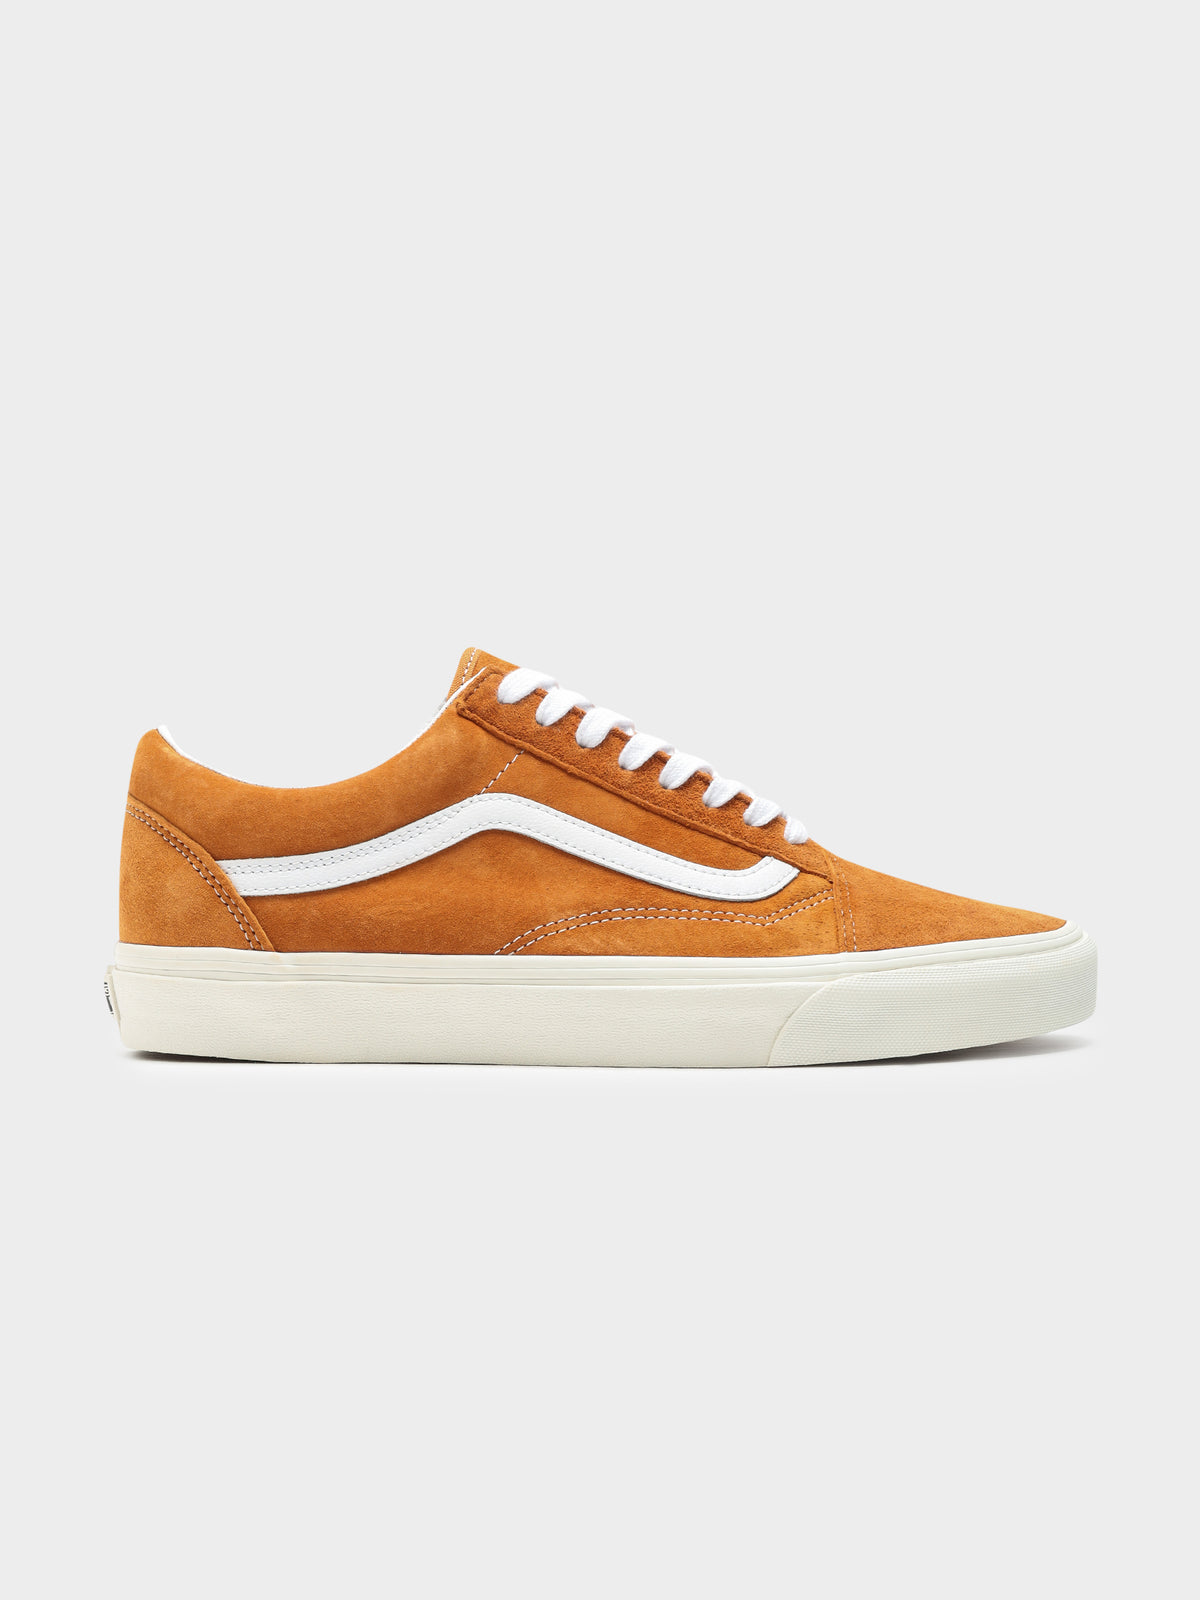 Unisex Old Skool Sneaker in Desert Sun Orange